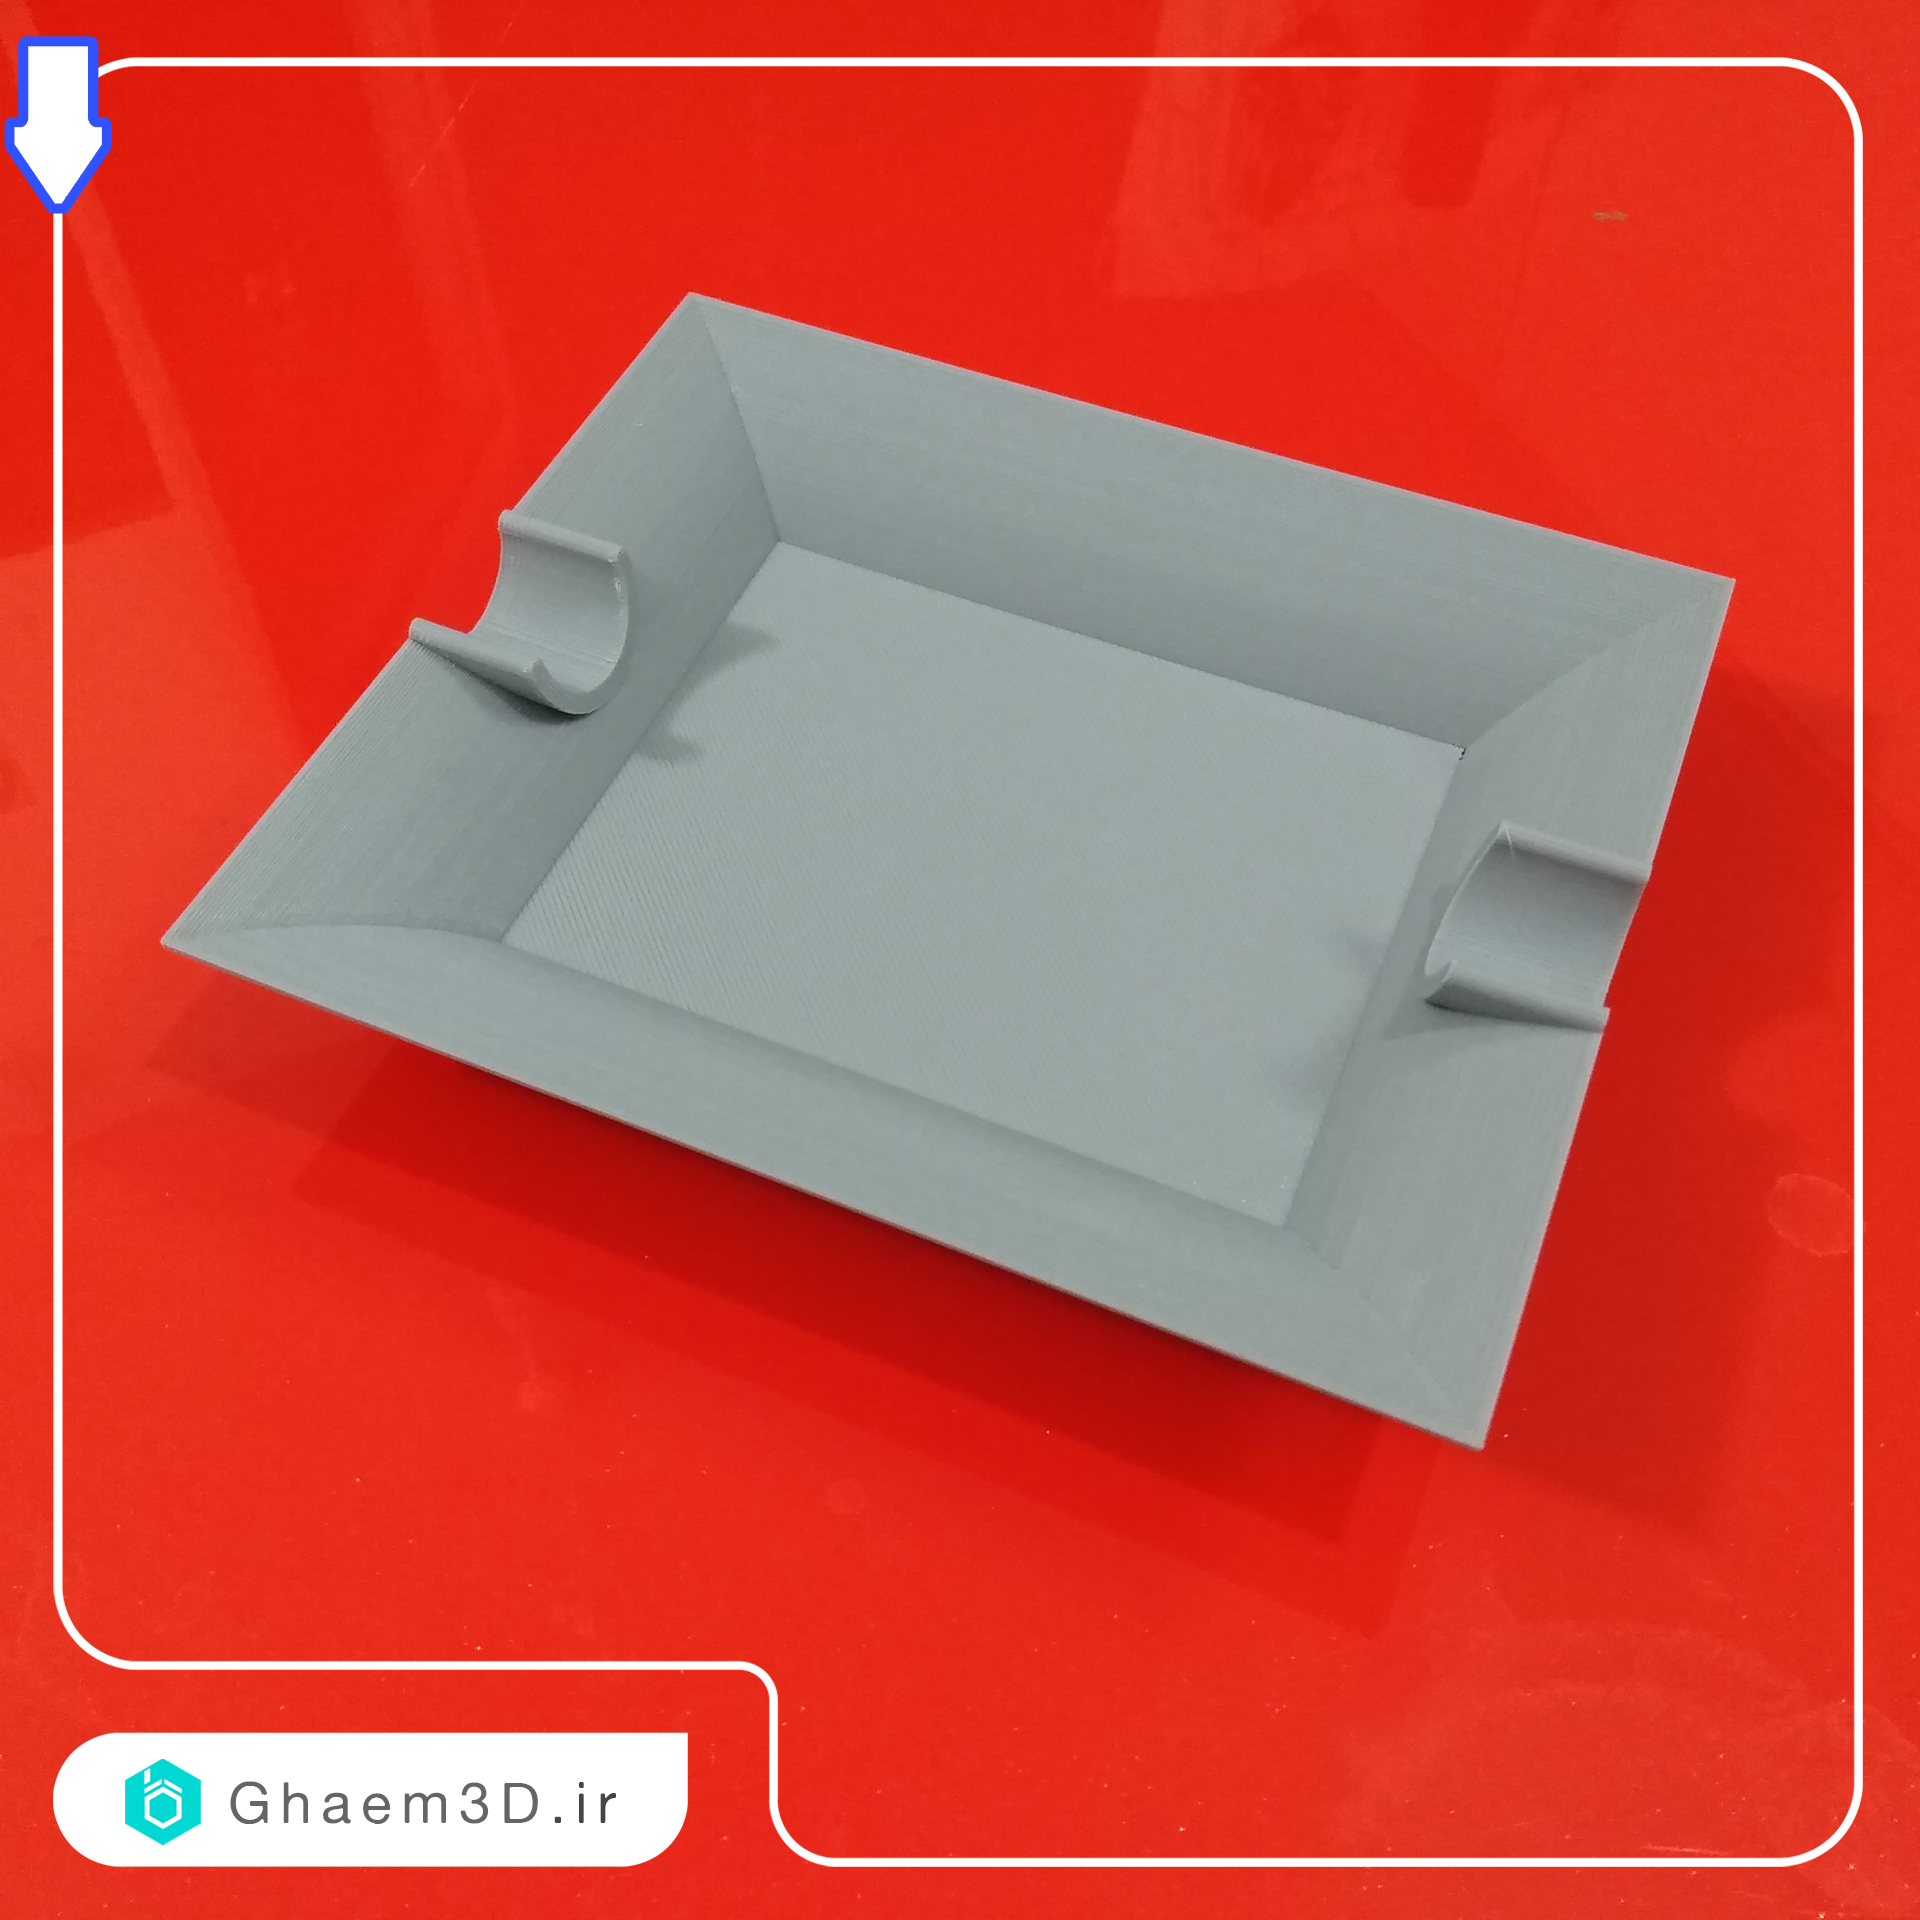 ساخت قالب سرامیک به کمک نمونه پرینت سه بعدی